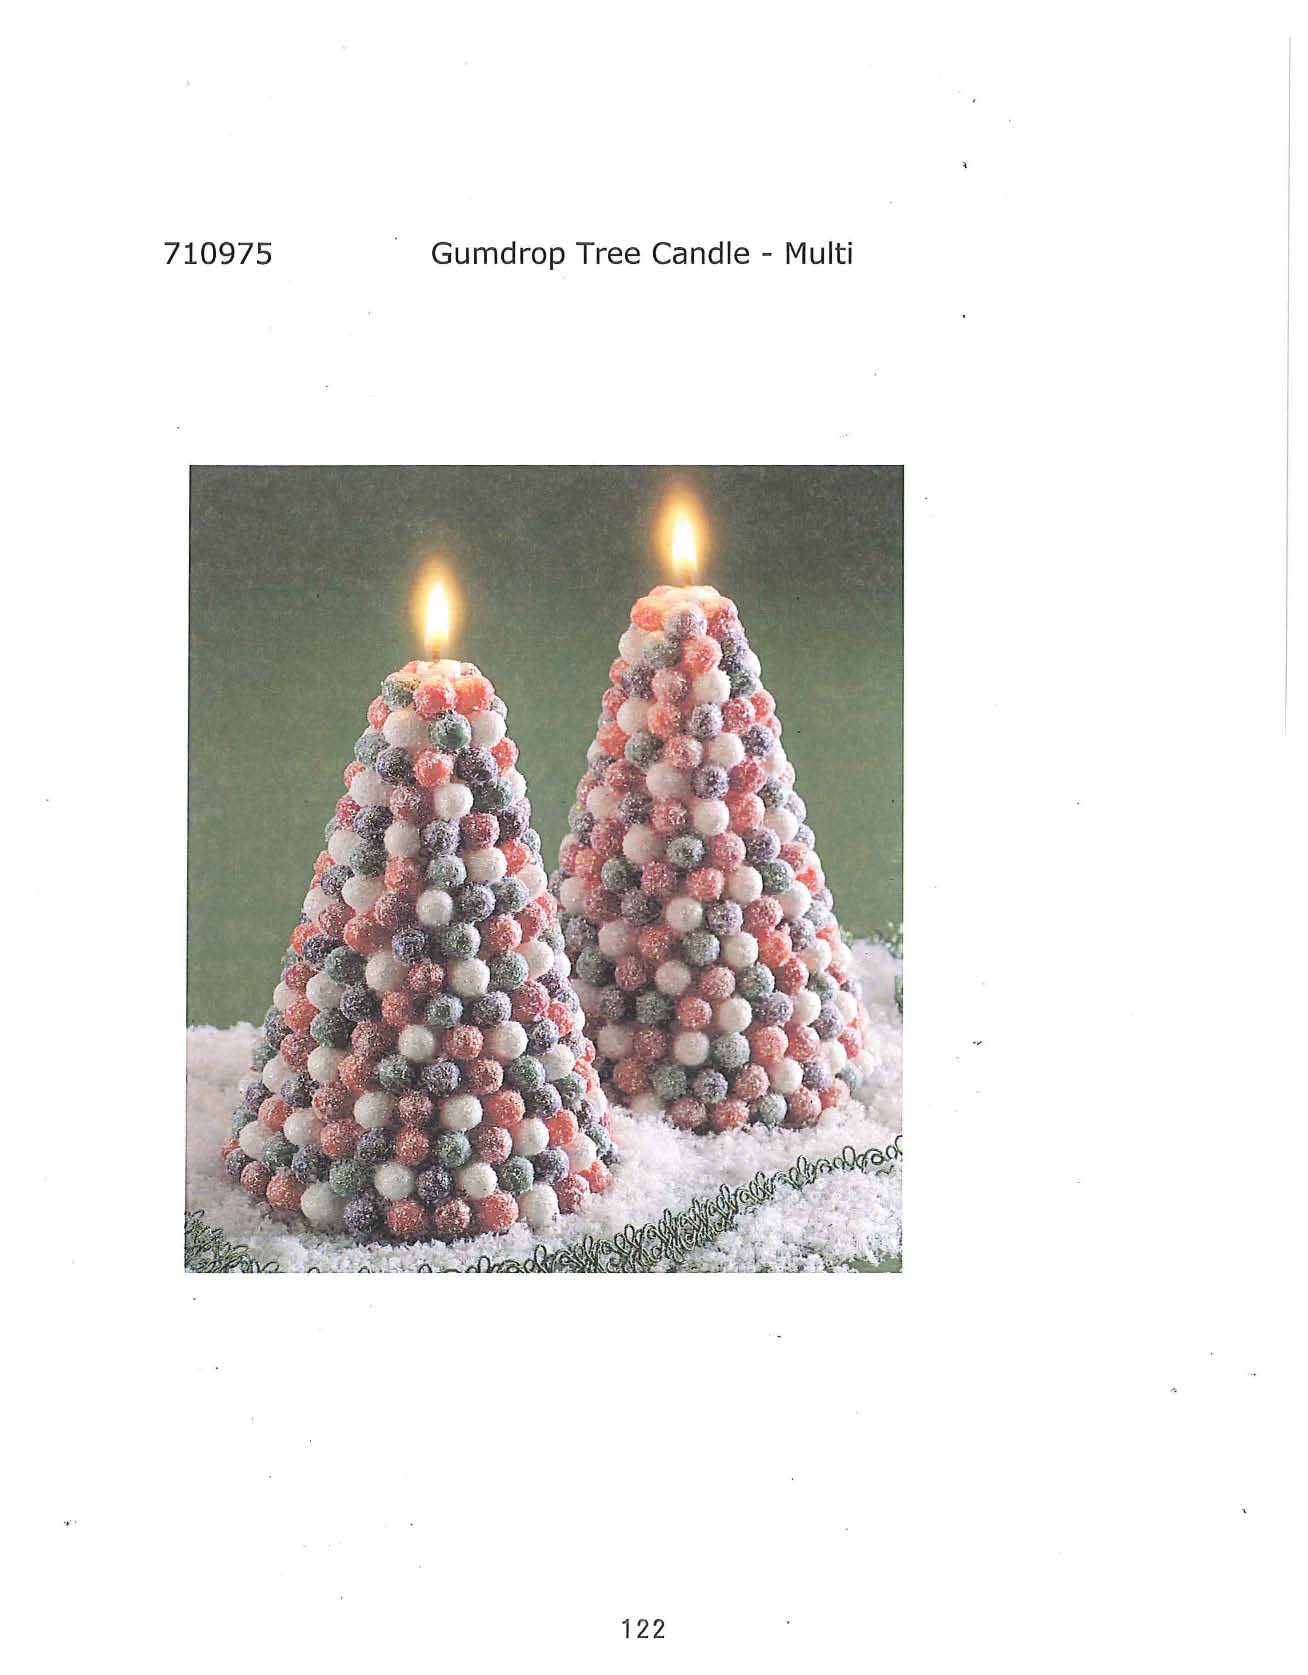 Gumdrop Tree Candle - Multi